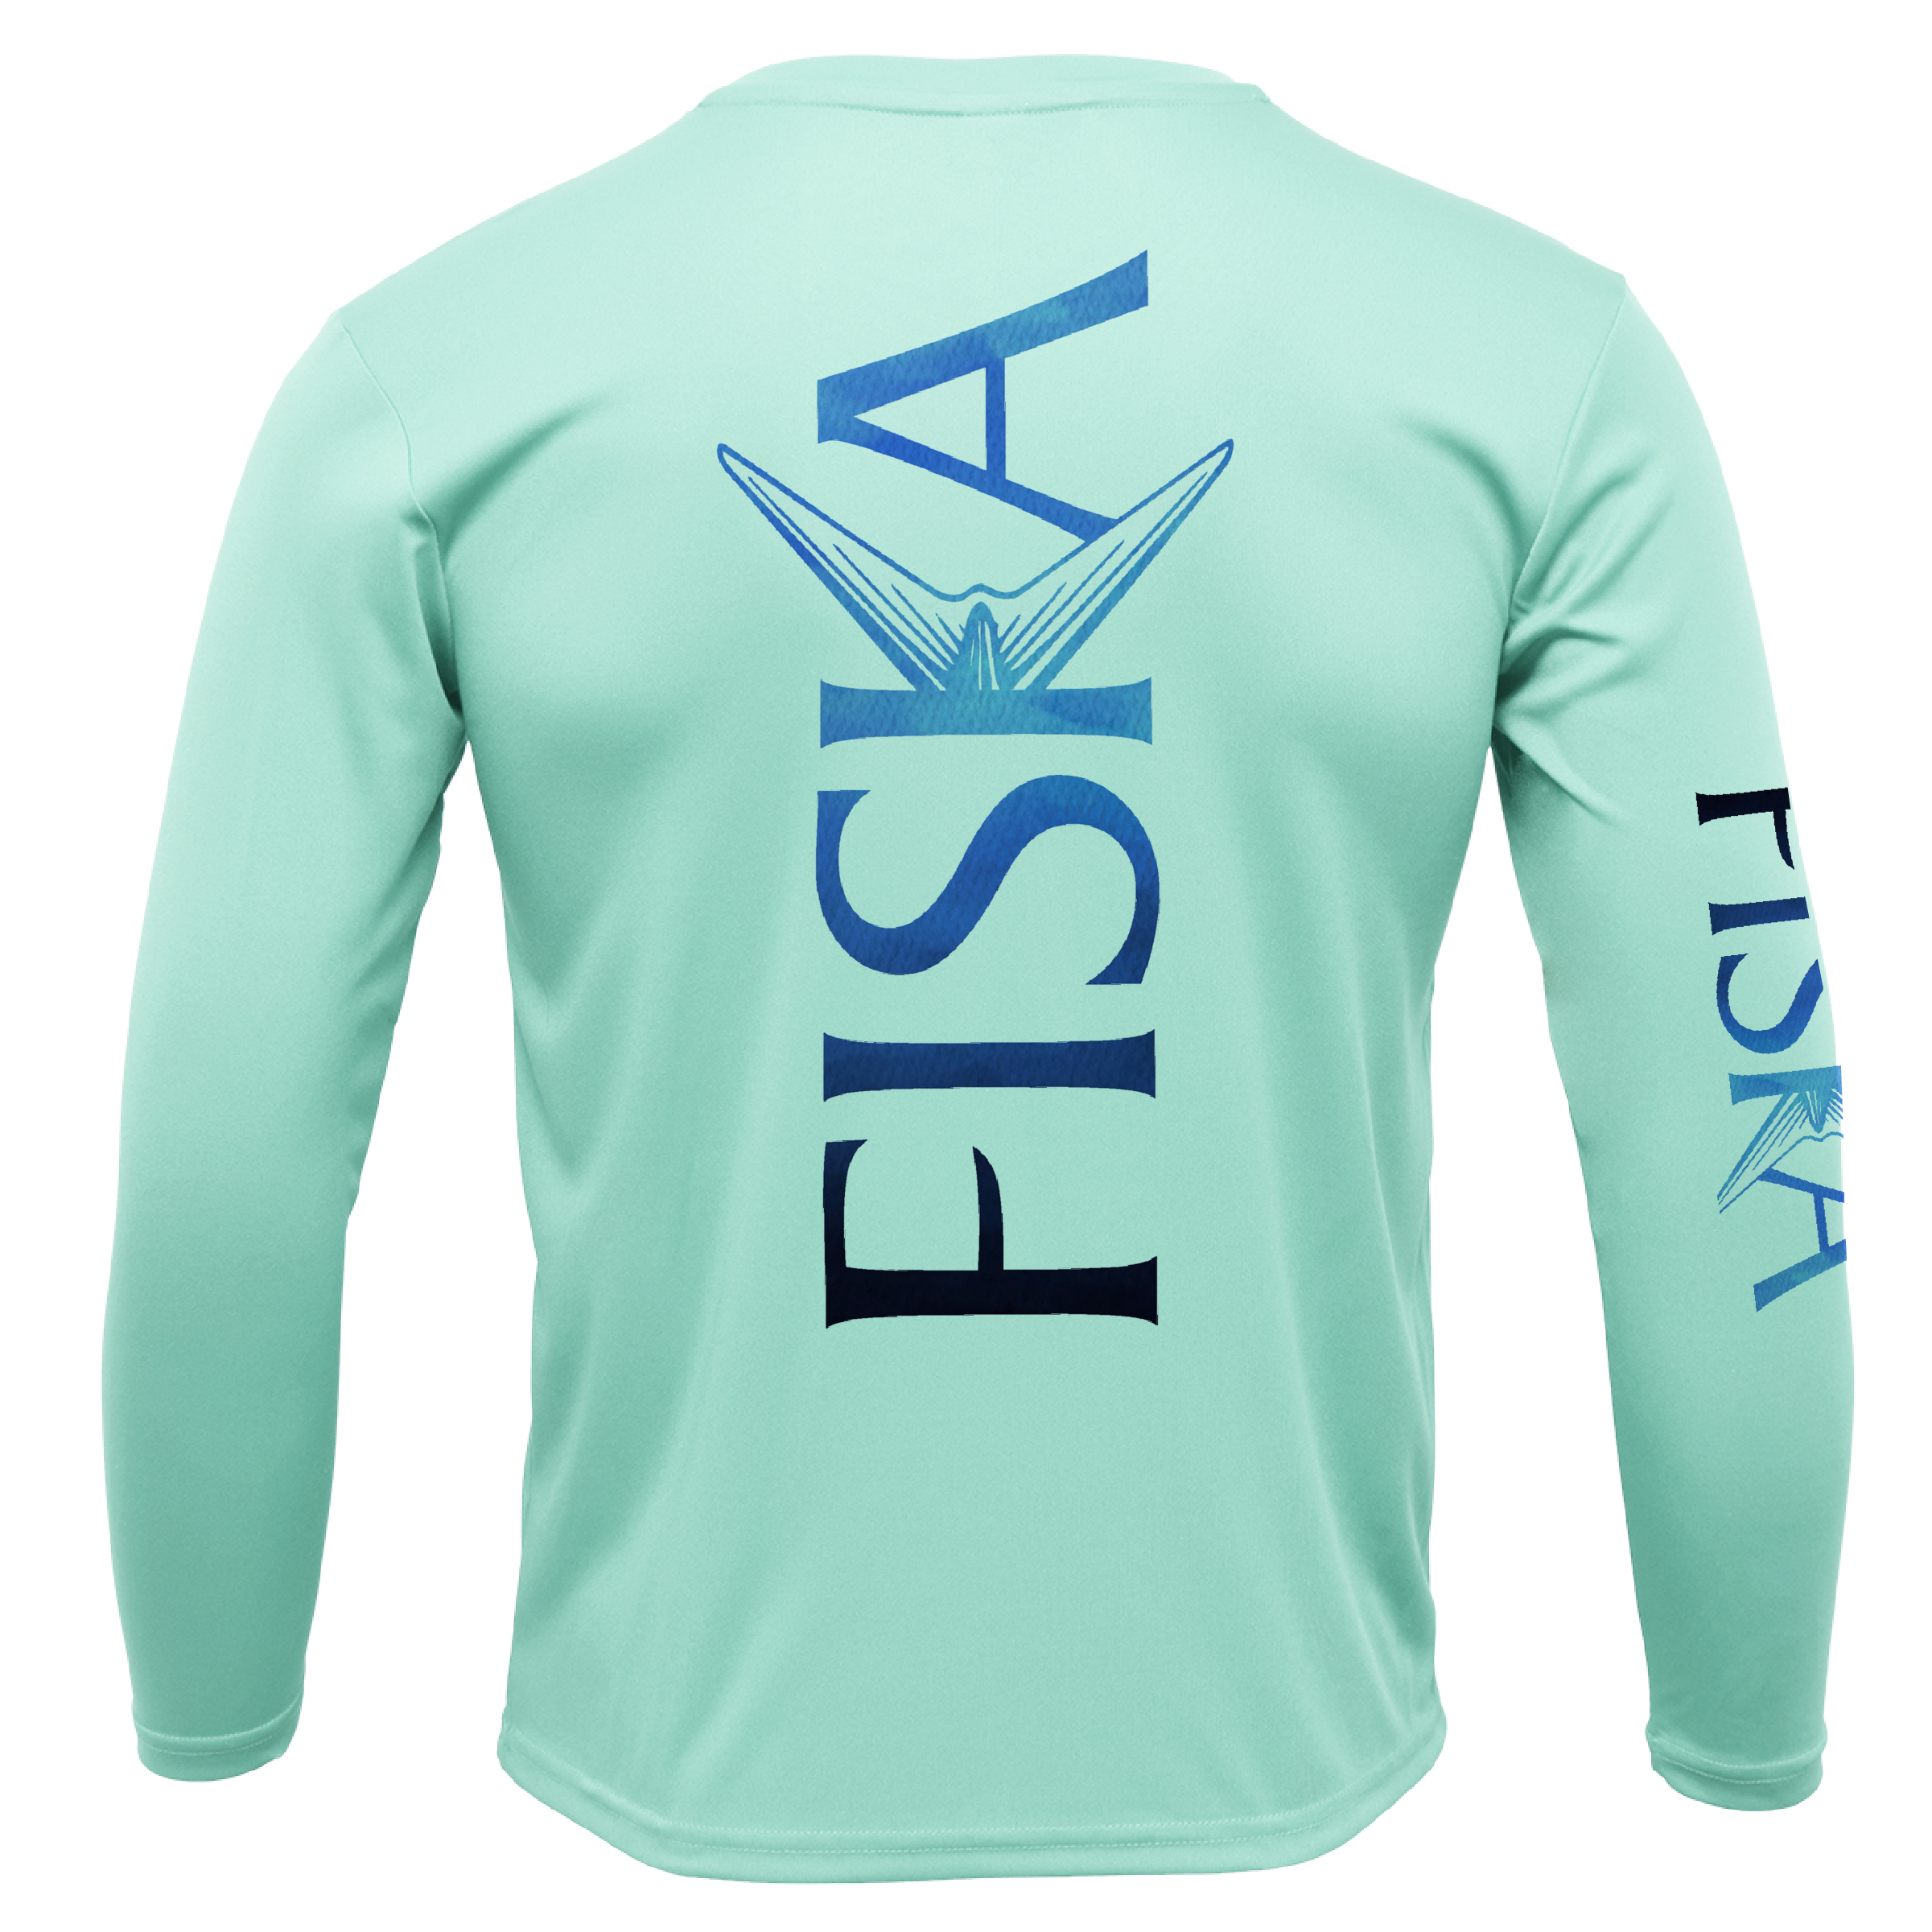 Youth FISKA Long-Sleeve Dry-Fit Shirt